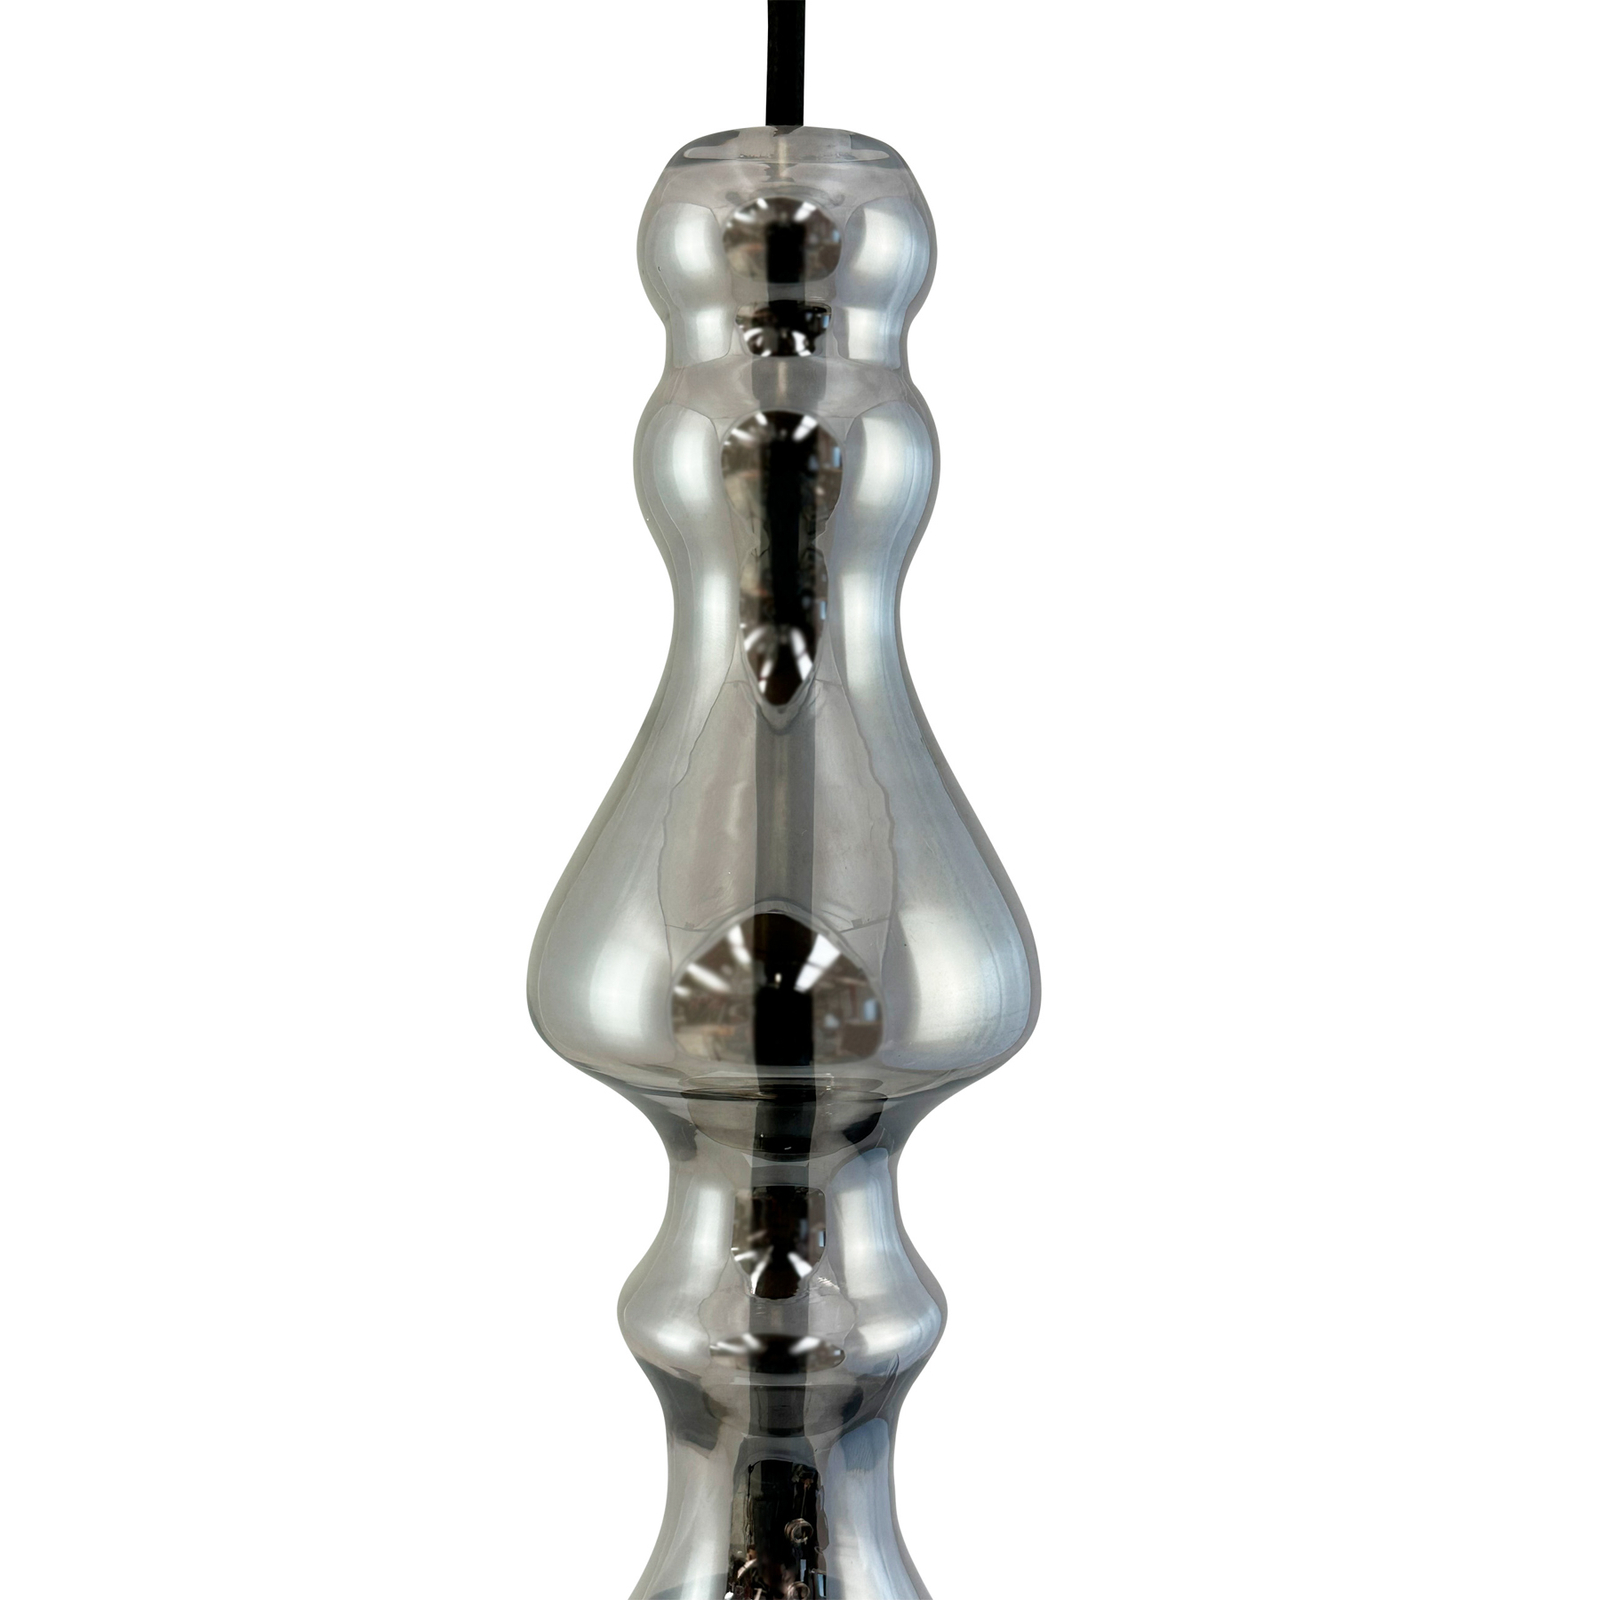 Dyberg Larsen Lea glass hanging light, smoky grey